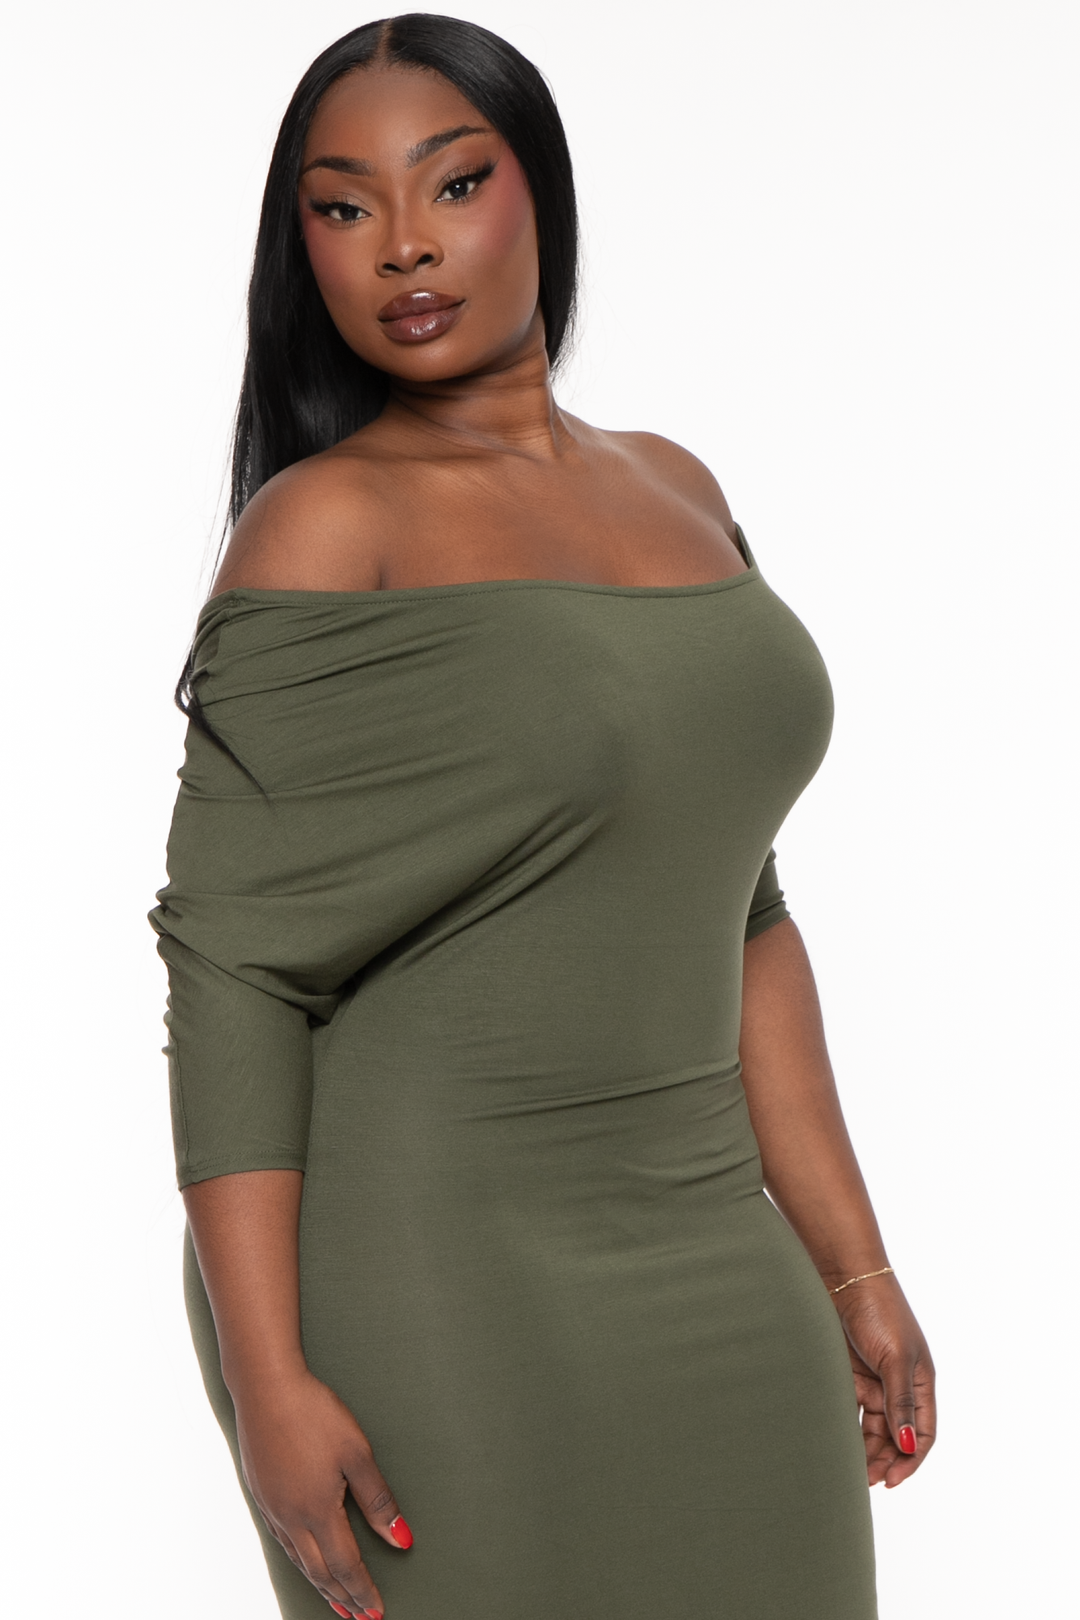 Curvy Sense Dresses Plus Size Asymmetric Knit Dress - Olive